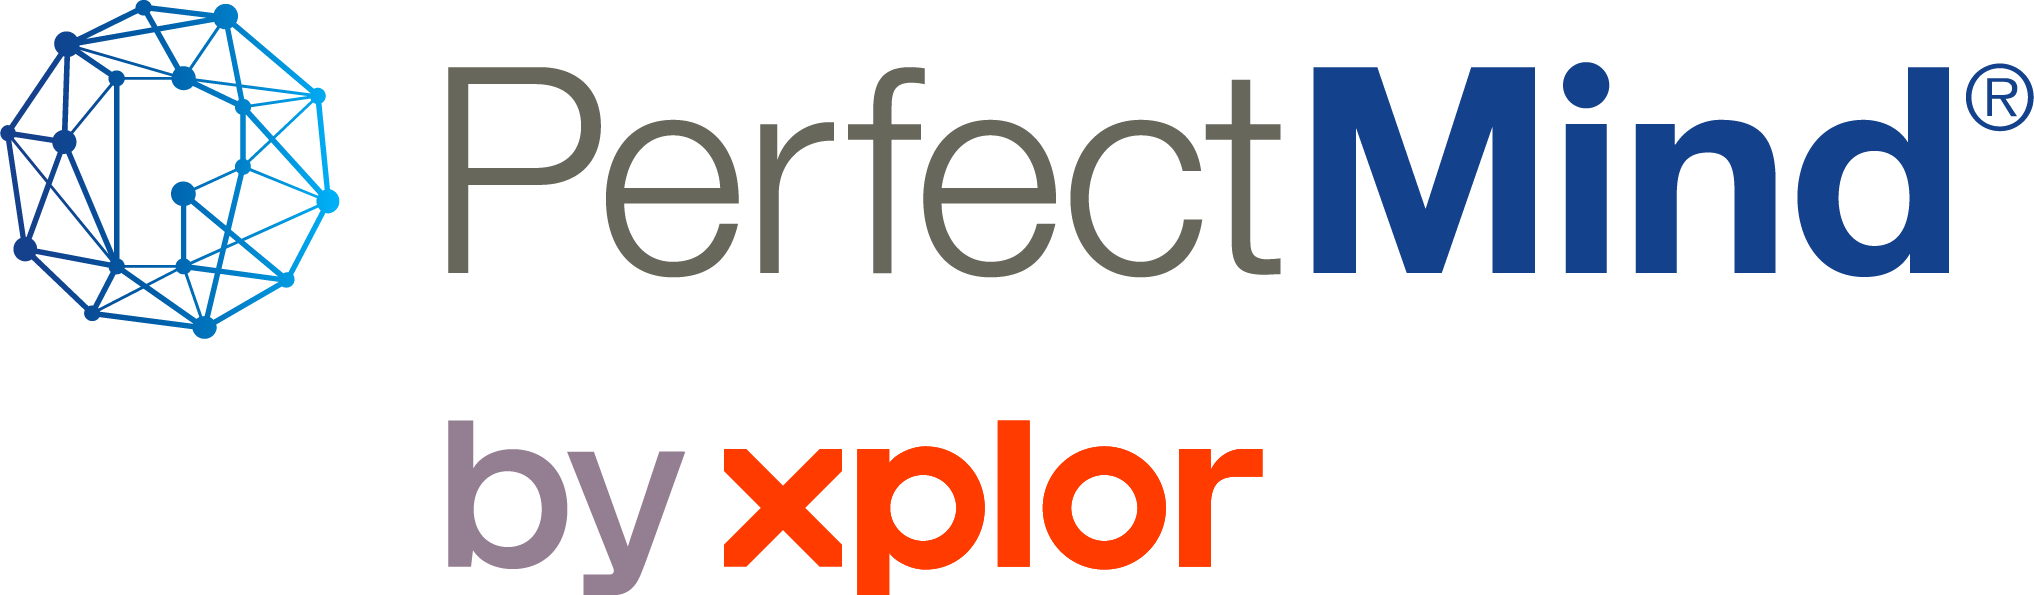 Perfectmind By Xplor Positive